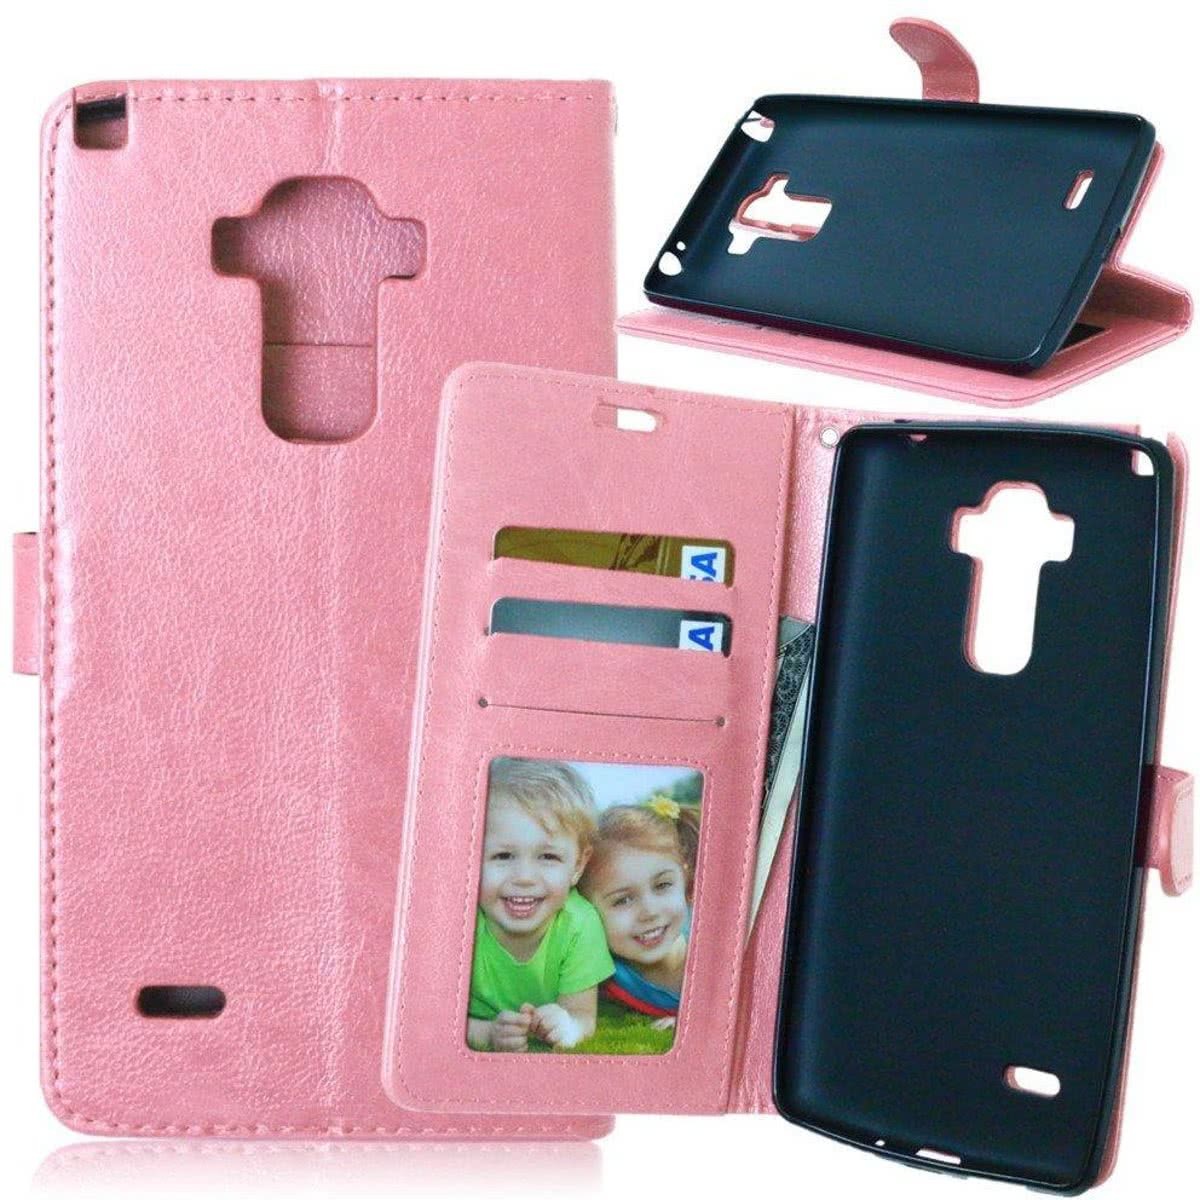 - Cyclone portemonnee case wallet hoesje LG G4 Stylus roze Accessoire van uitstekende kwaliteit